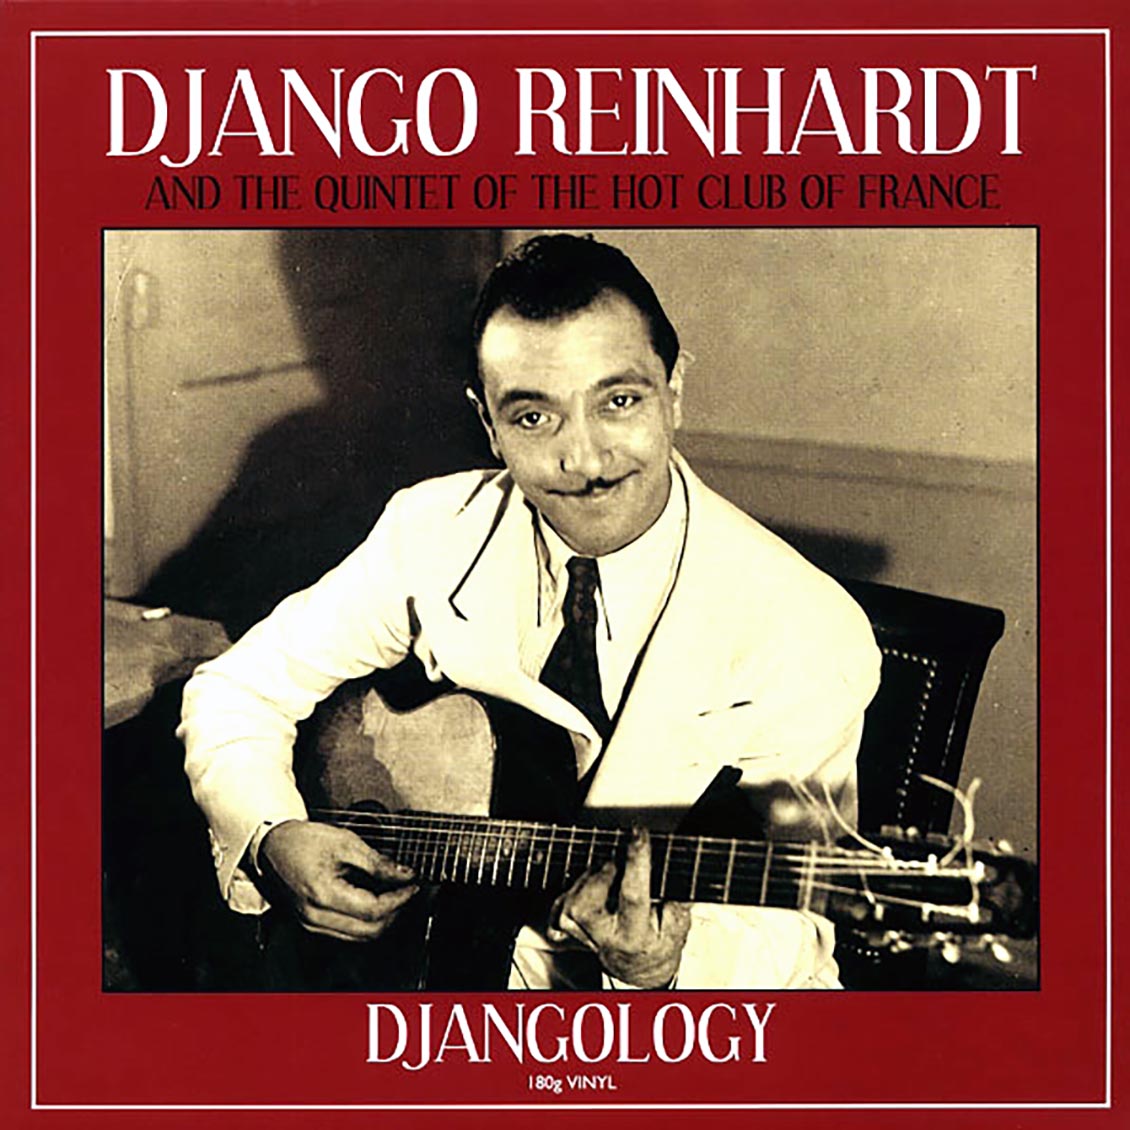 Django Reinhardt The Quintet Of The Hot Club Of France "Djangology' LP